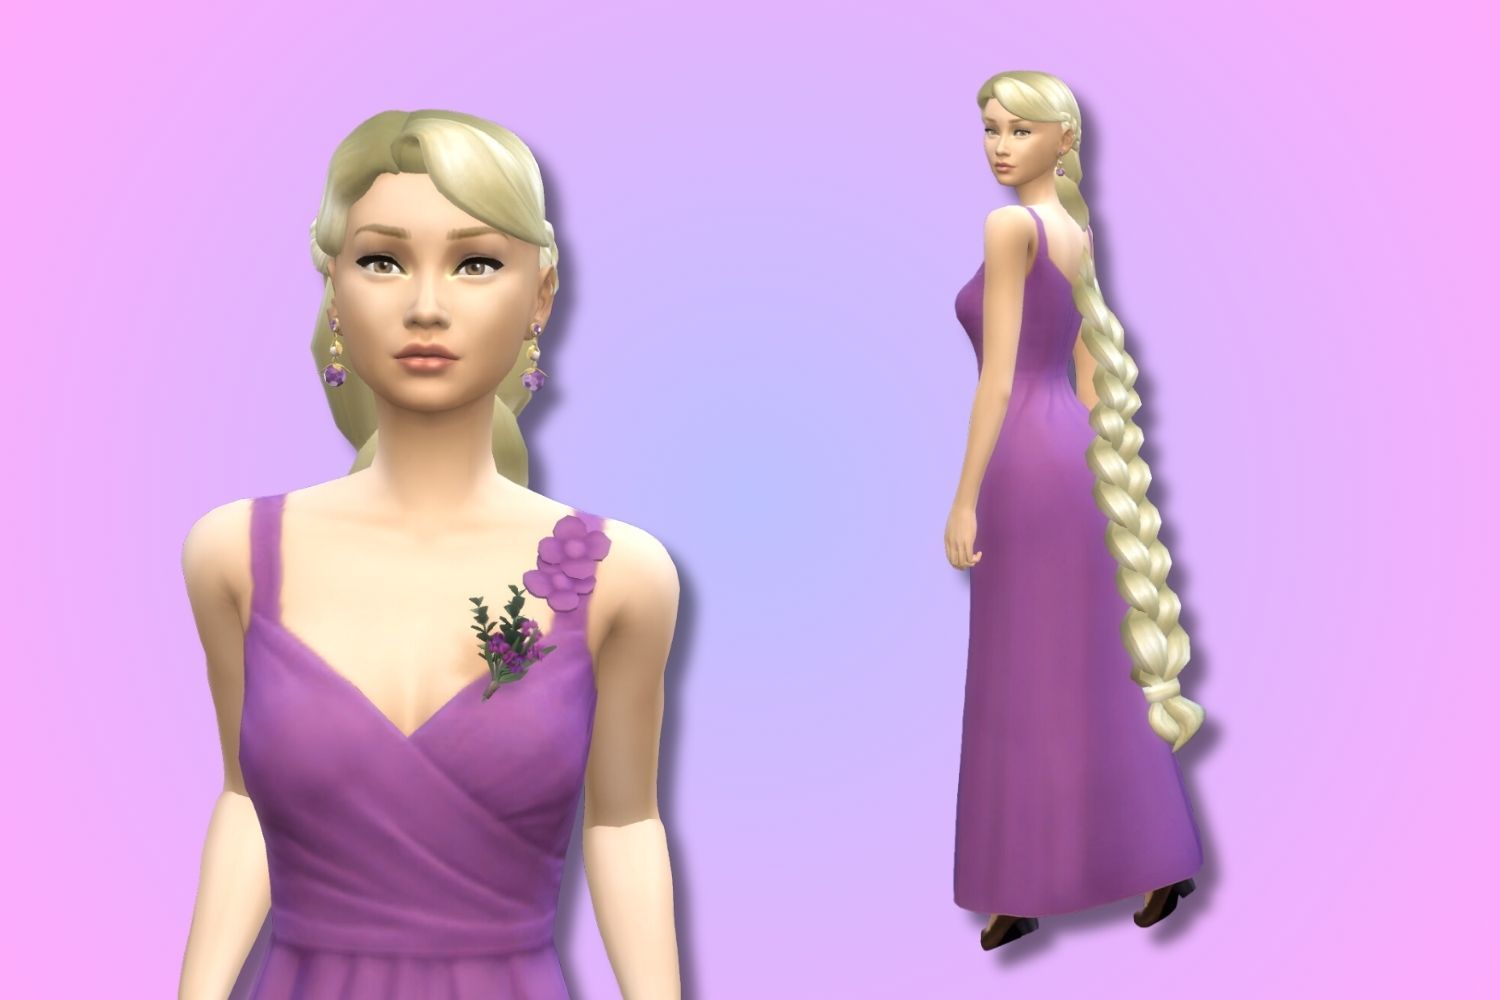 A Sim resembling Disney's Rapunzel is shown against a purple background.